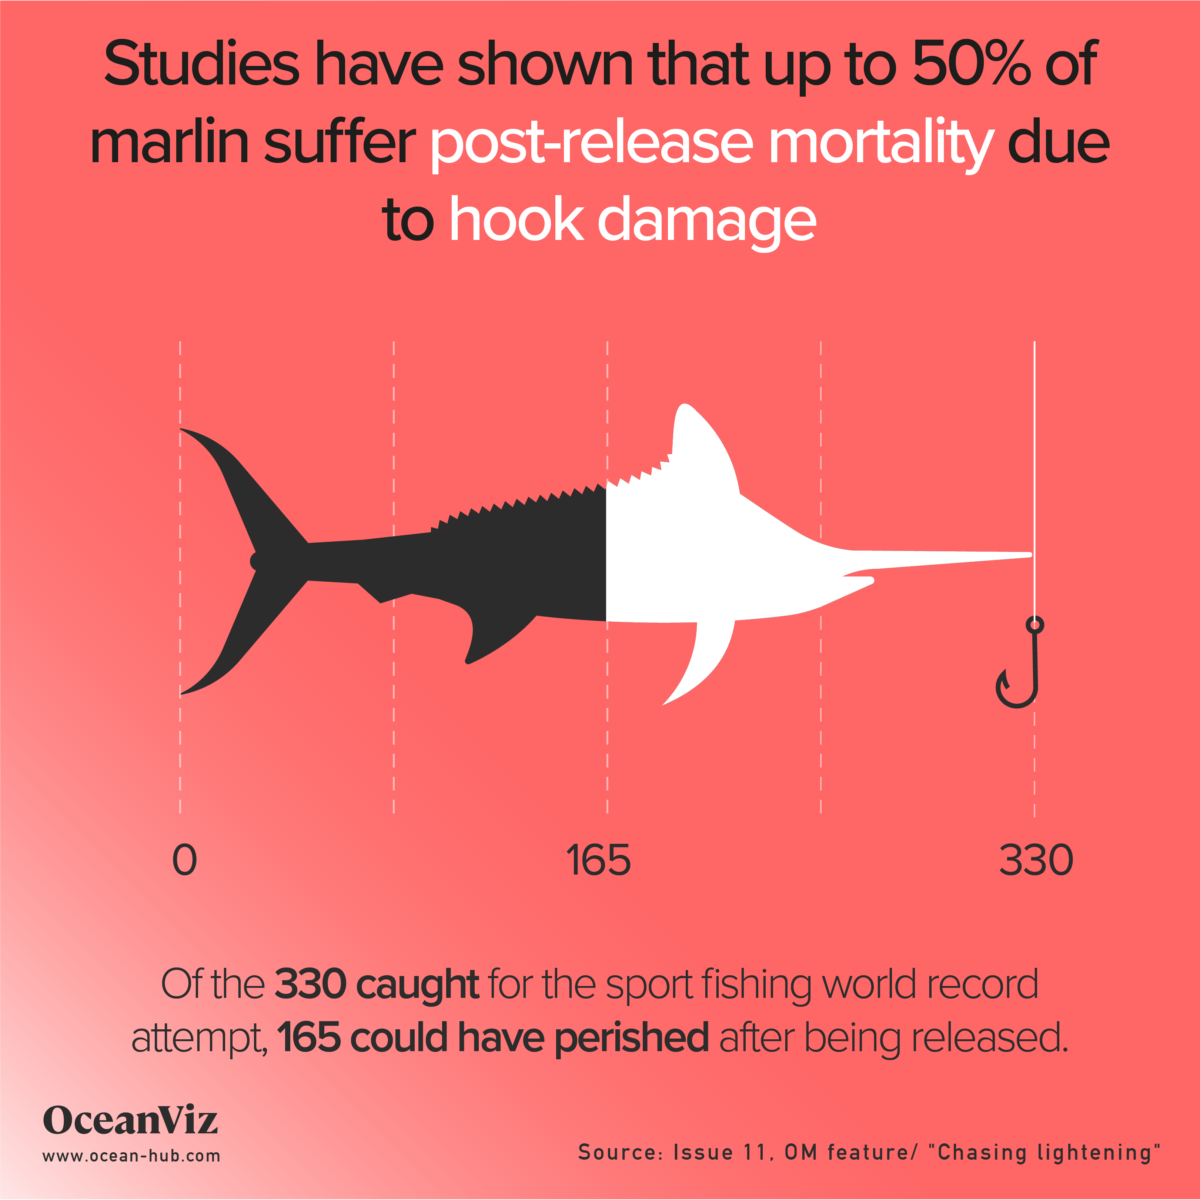 Marlin post-release mortality